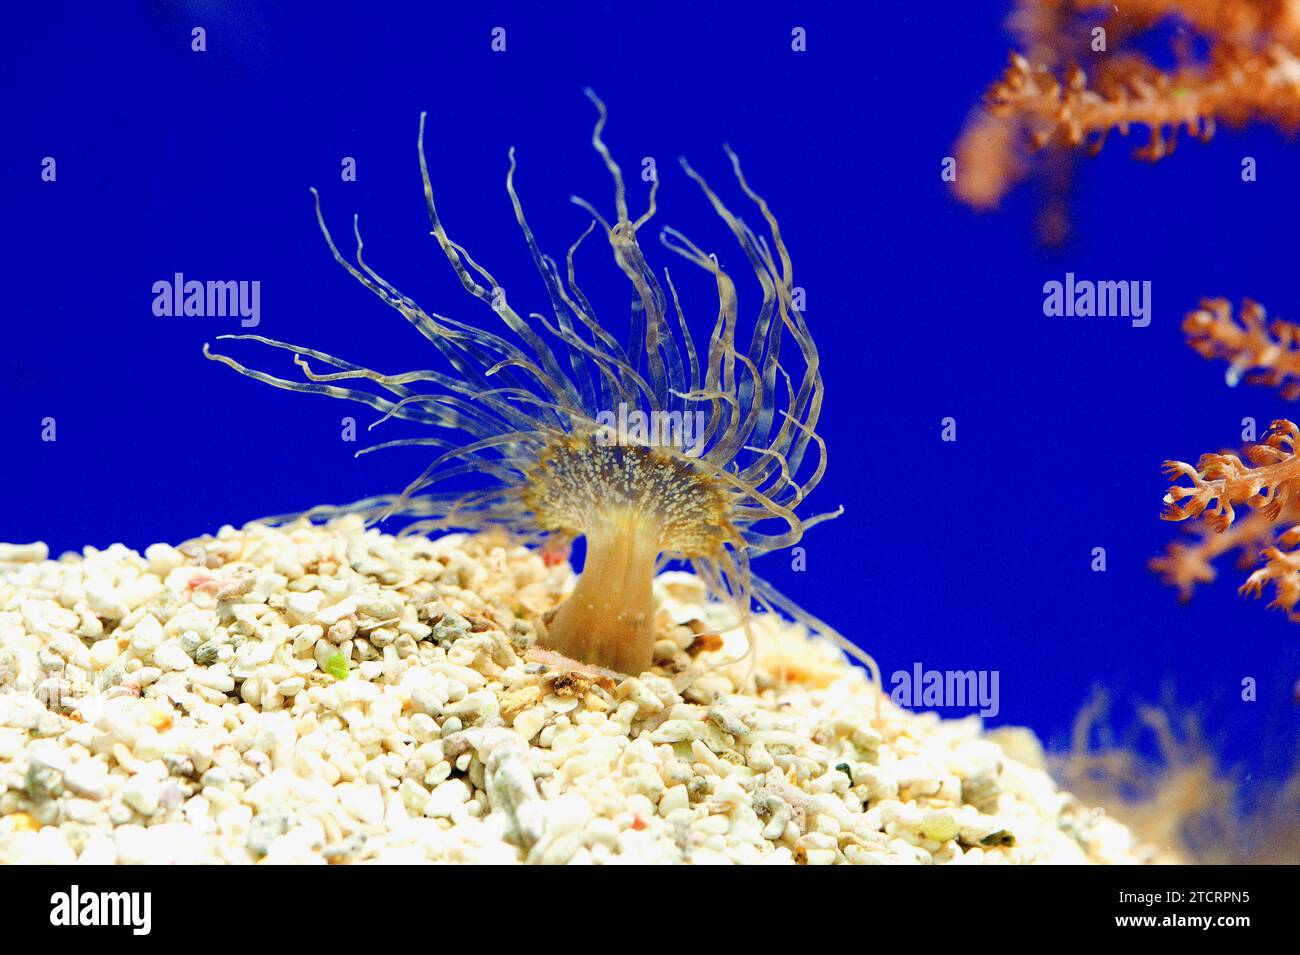 Aiptasia mutabilis is a sea anemone that contains symbiotic algae. Cnidaria. Anthozoa. This photo was taken in captivity. Stock Photo